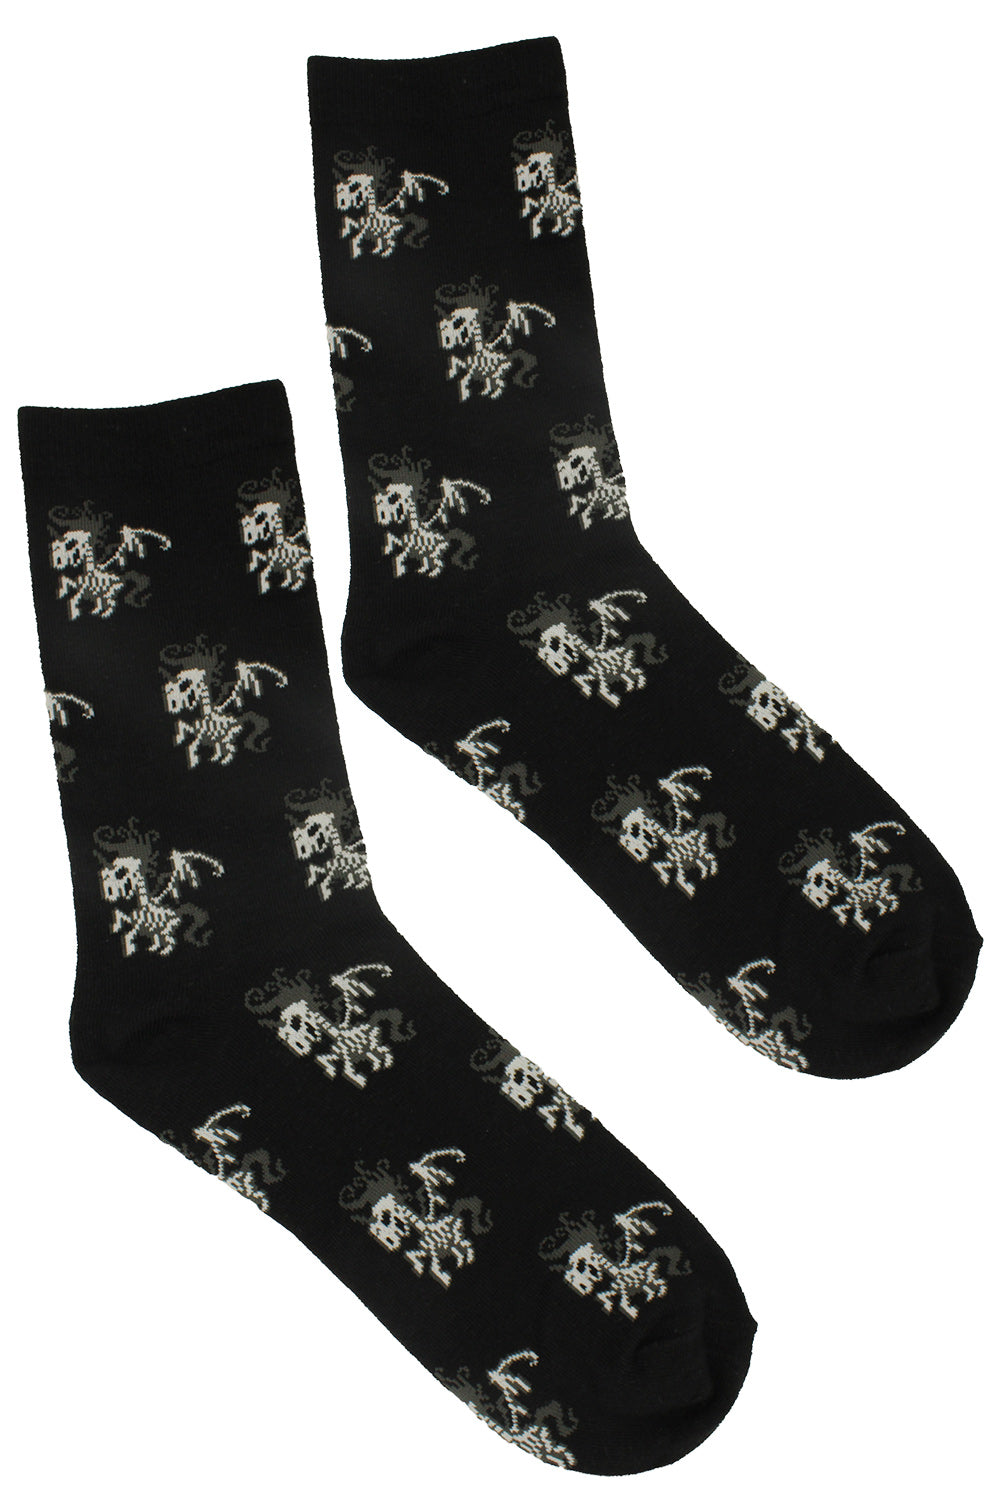 Unibones Socks